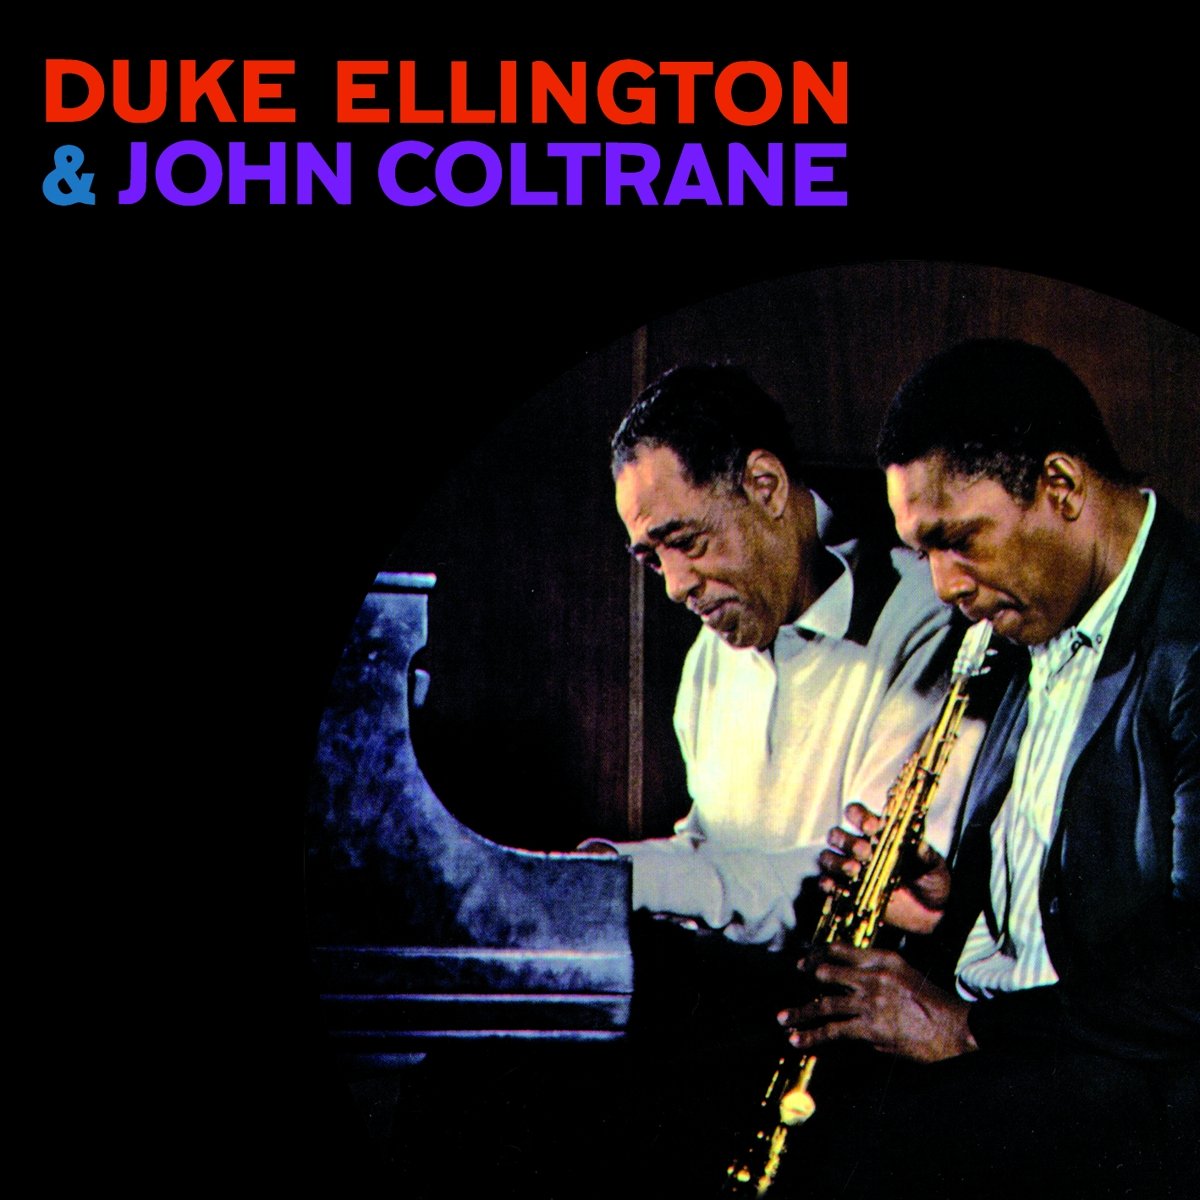 Duke Ellington & John Coltrane  (Acoustic sounds Series) (180g)